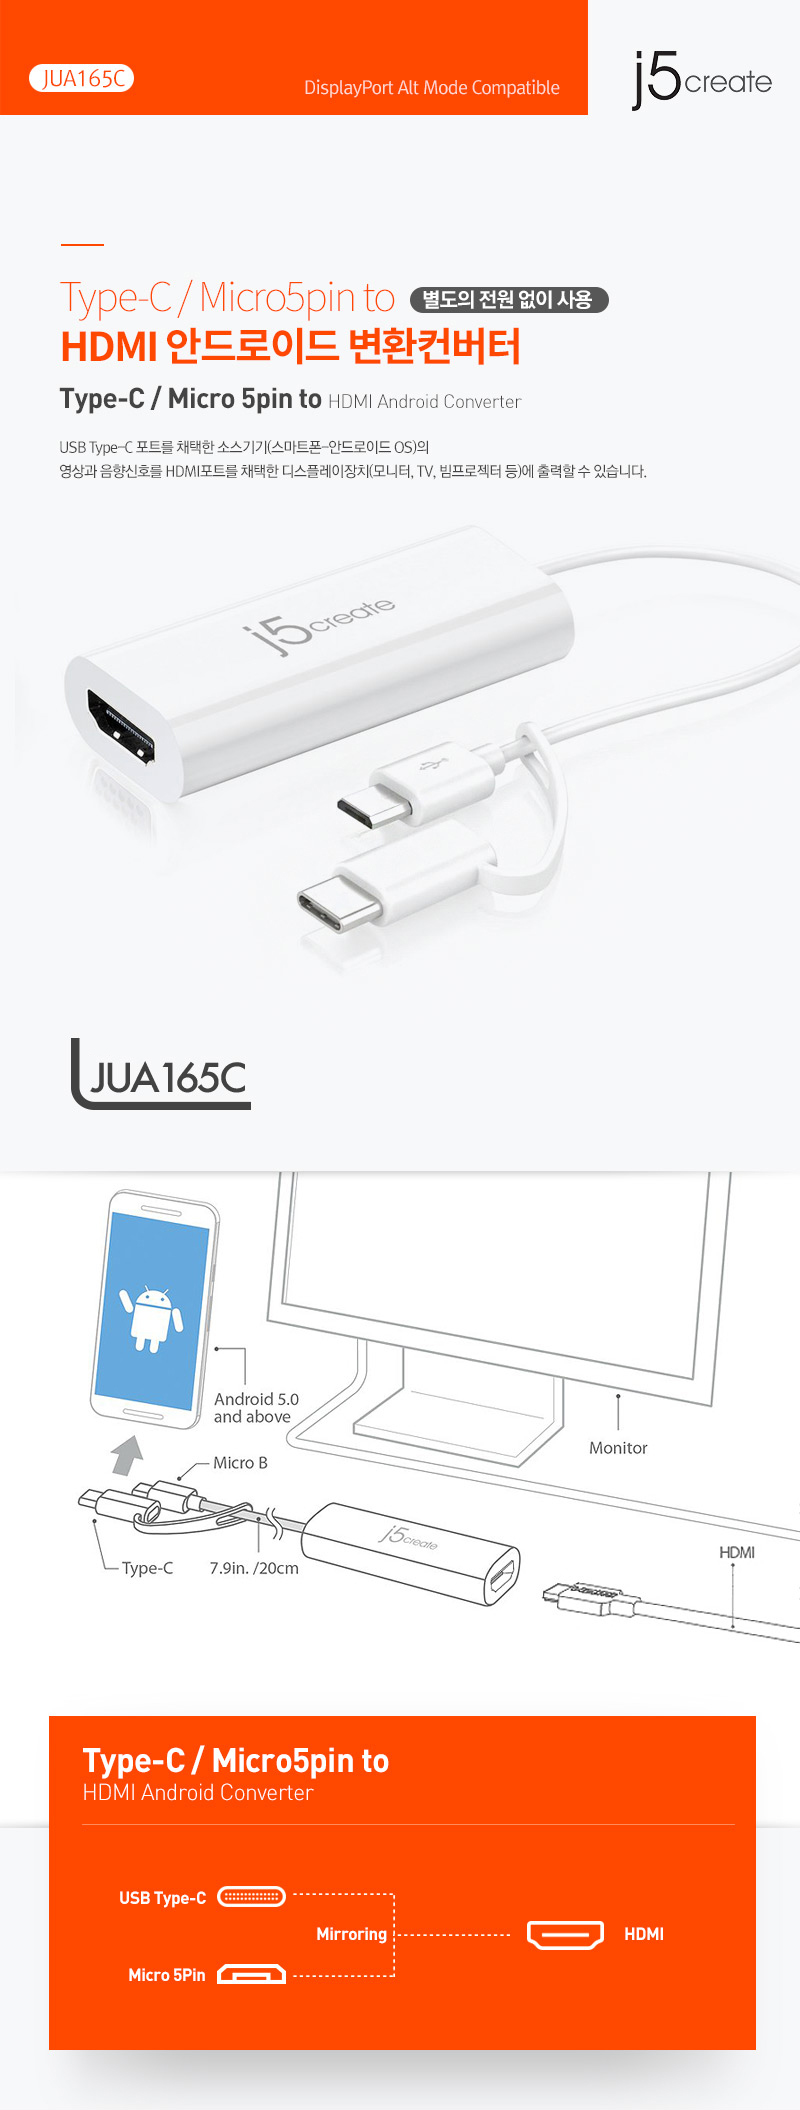 Kaijet (j5 create) [JUA165C] Android USB to HDMI Display Adapter